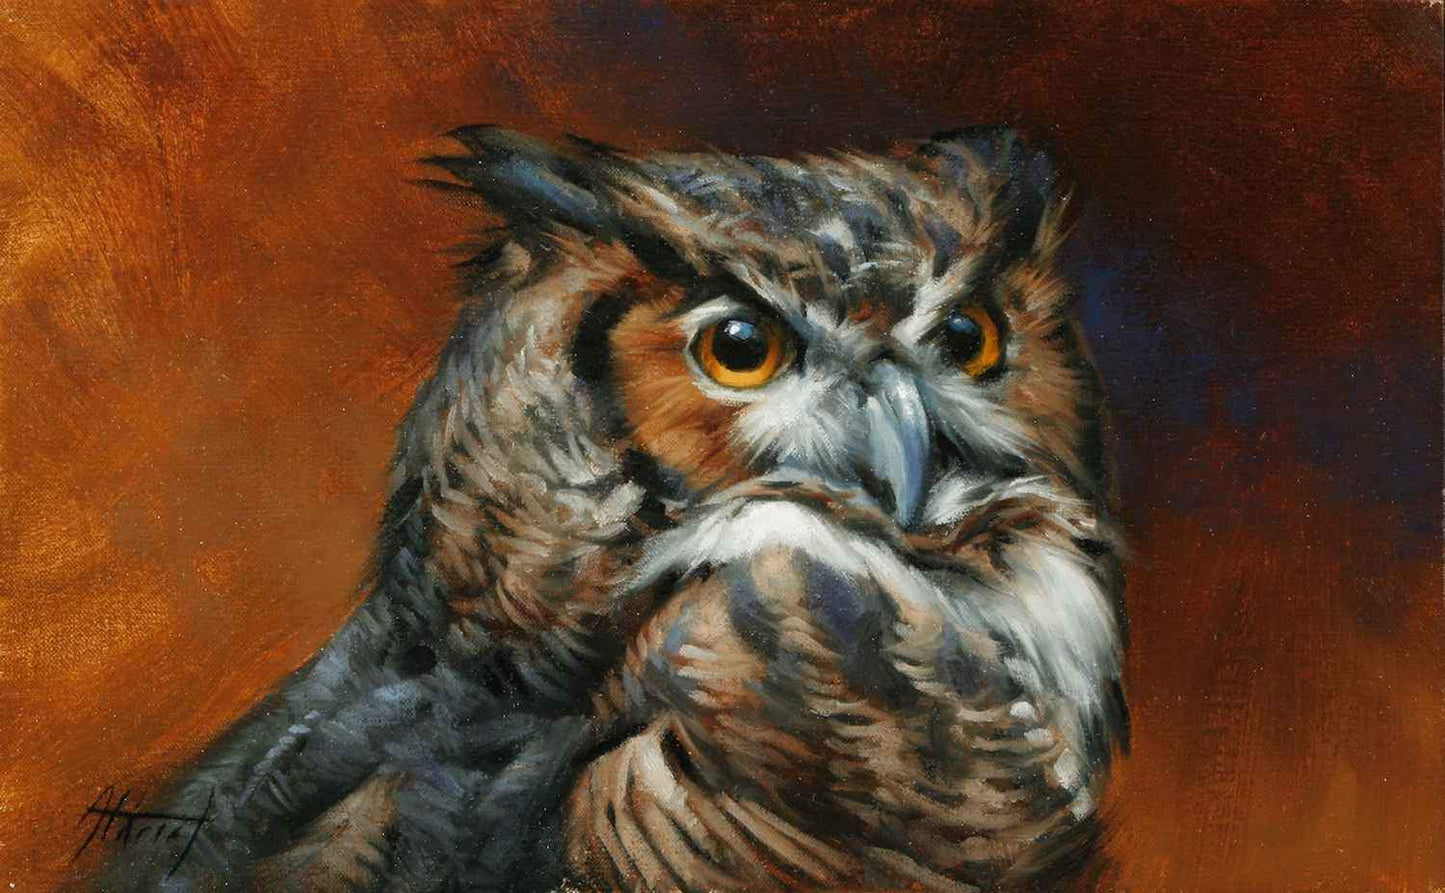 Edward Aldrich-Great Horned Owl Portrait-Sorrel Sky Gallery-Painting